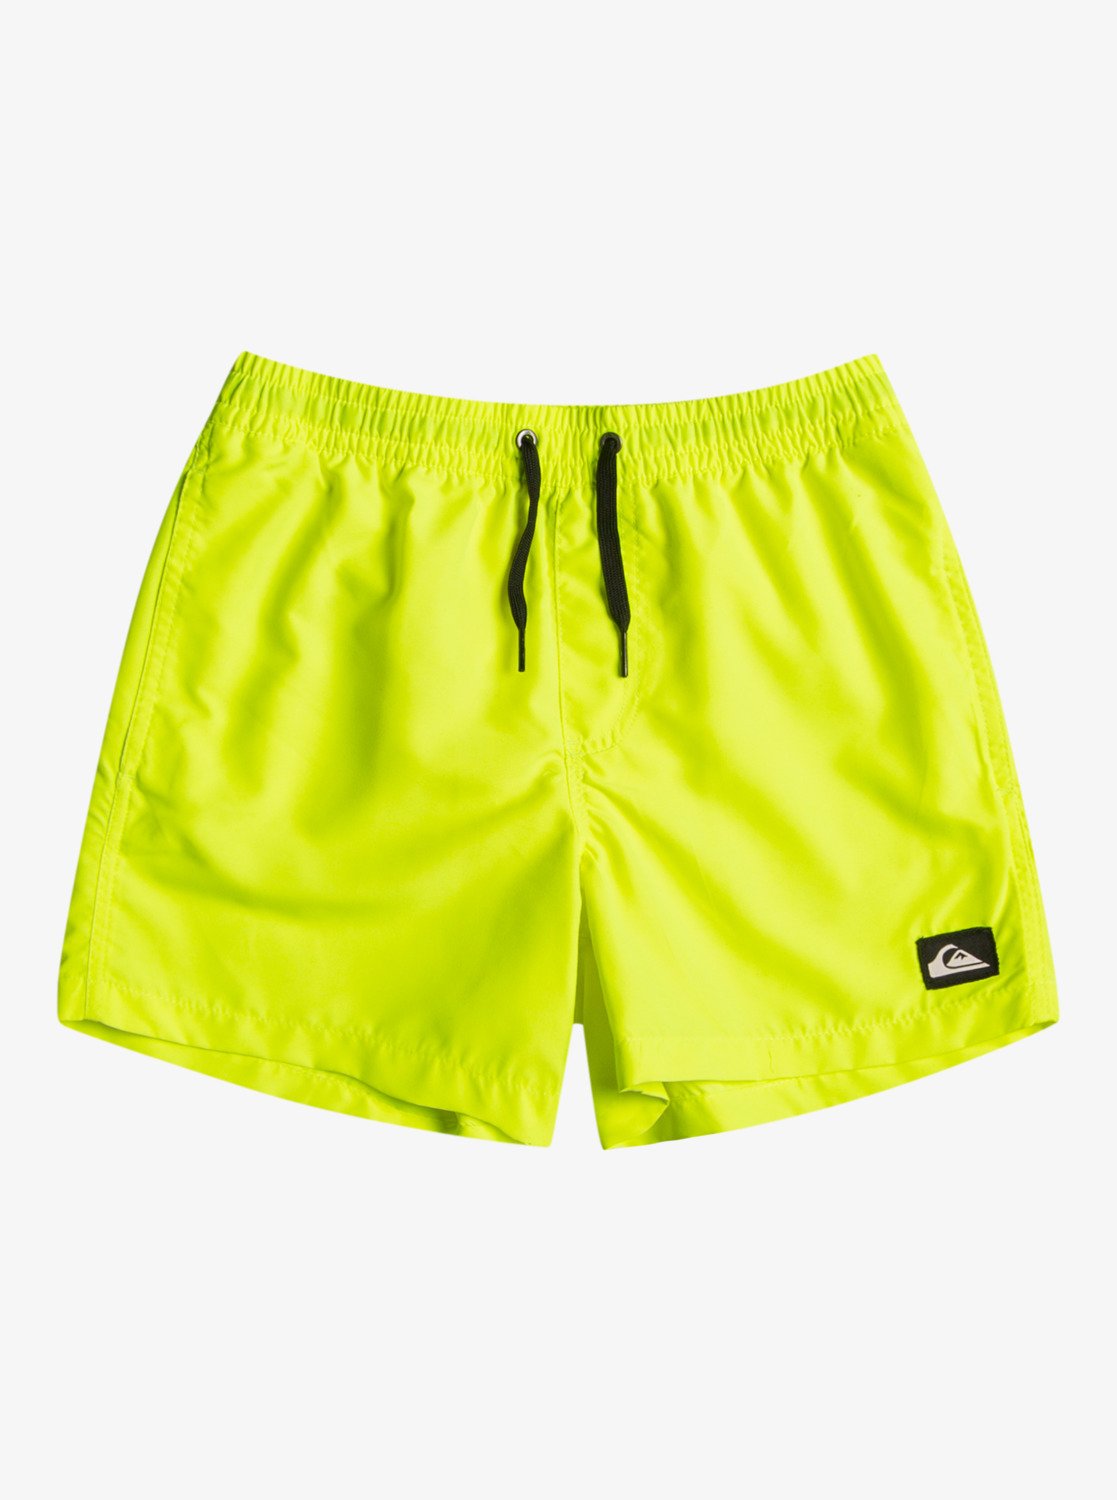 Quiksilver Everyday 13" Swim Shorts in Yellow